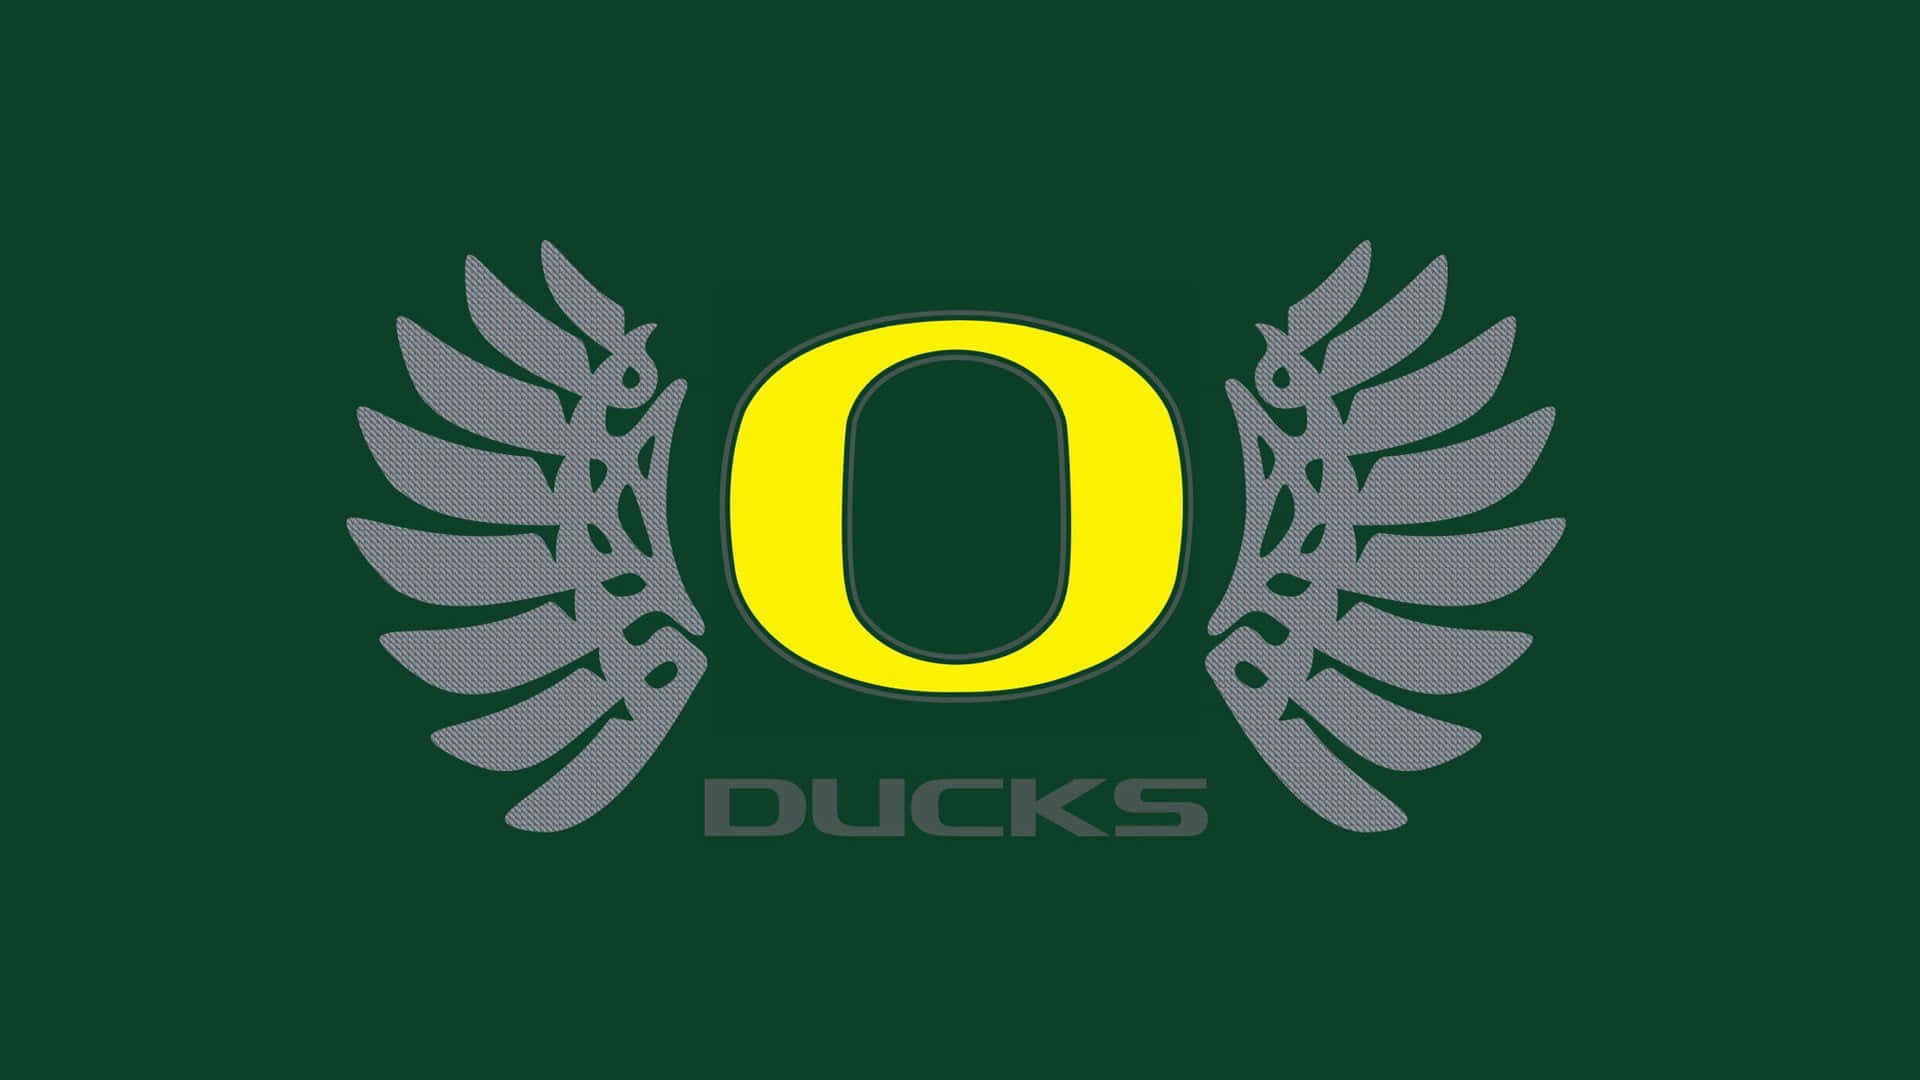 Oregon Ducks Football Team In Action Background